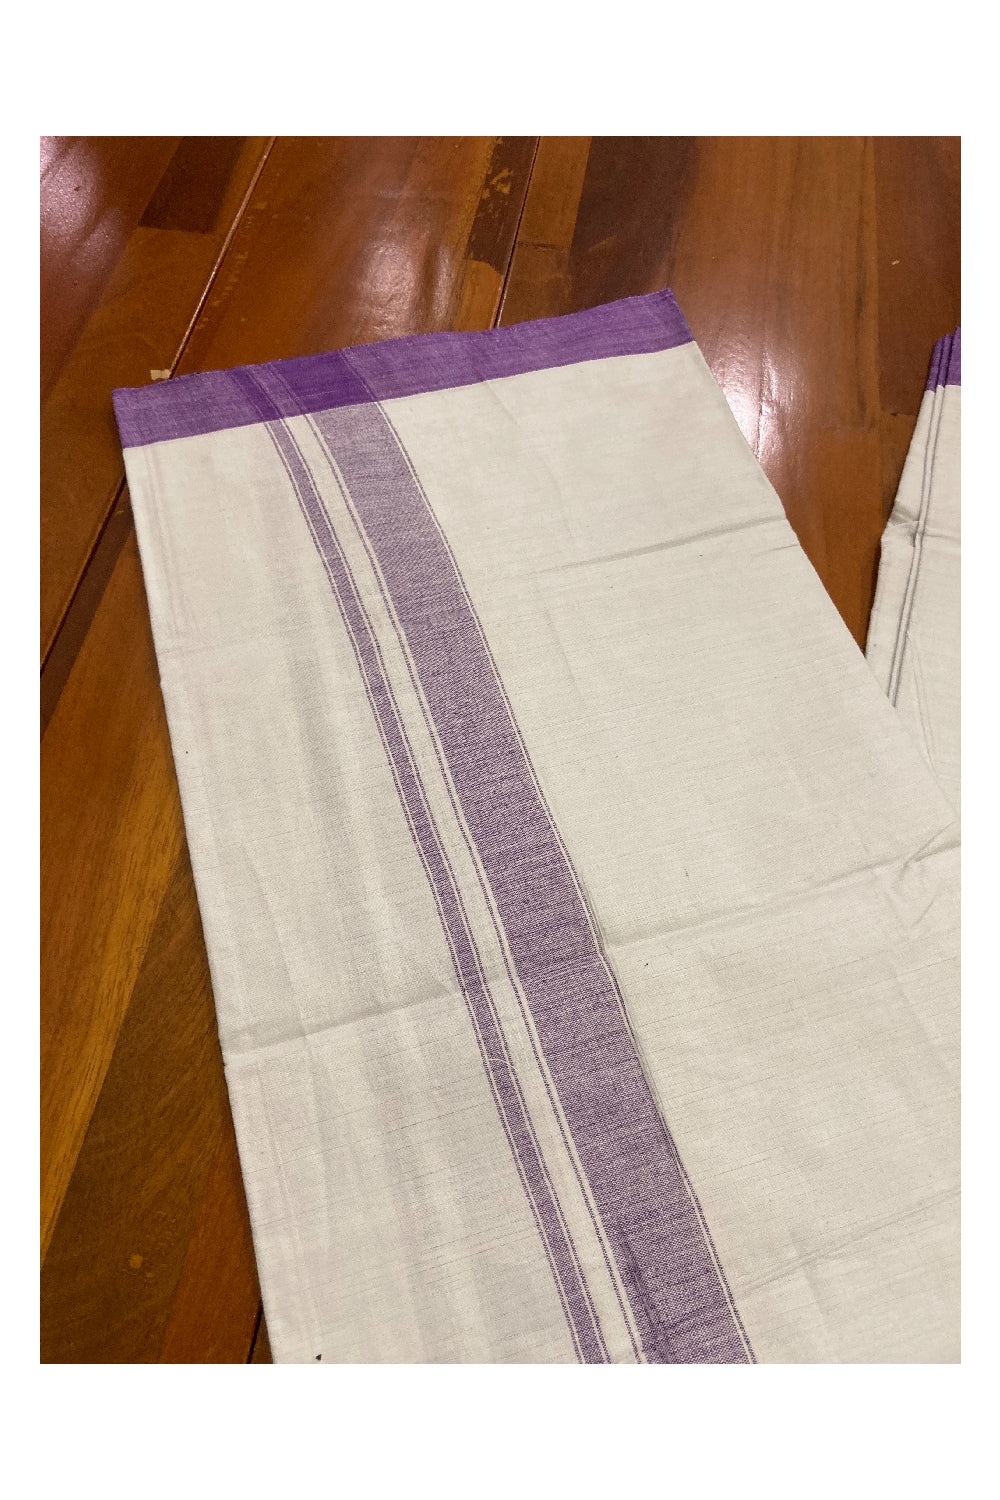 Southloom Premium Handloom Pure White Solid Single Mundu (Lungi) with Violet Border